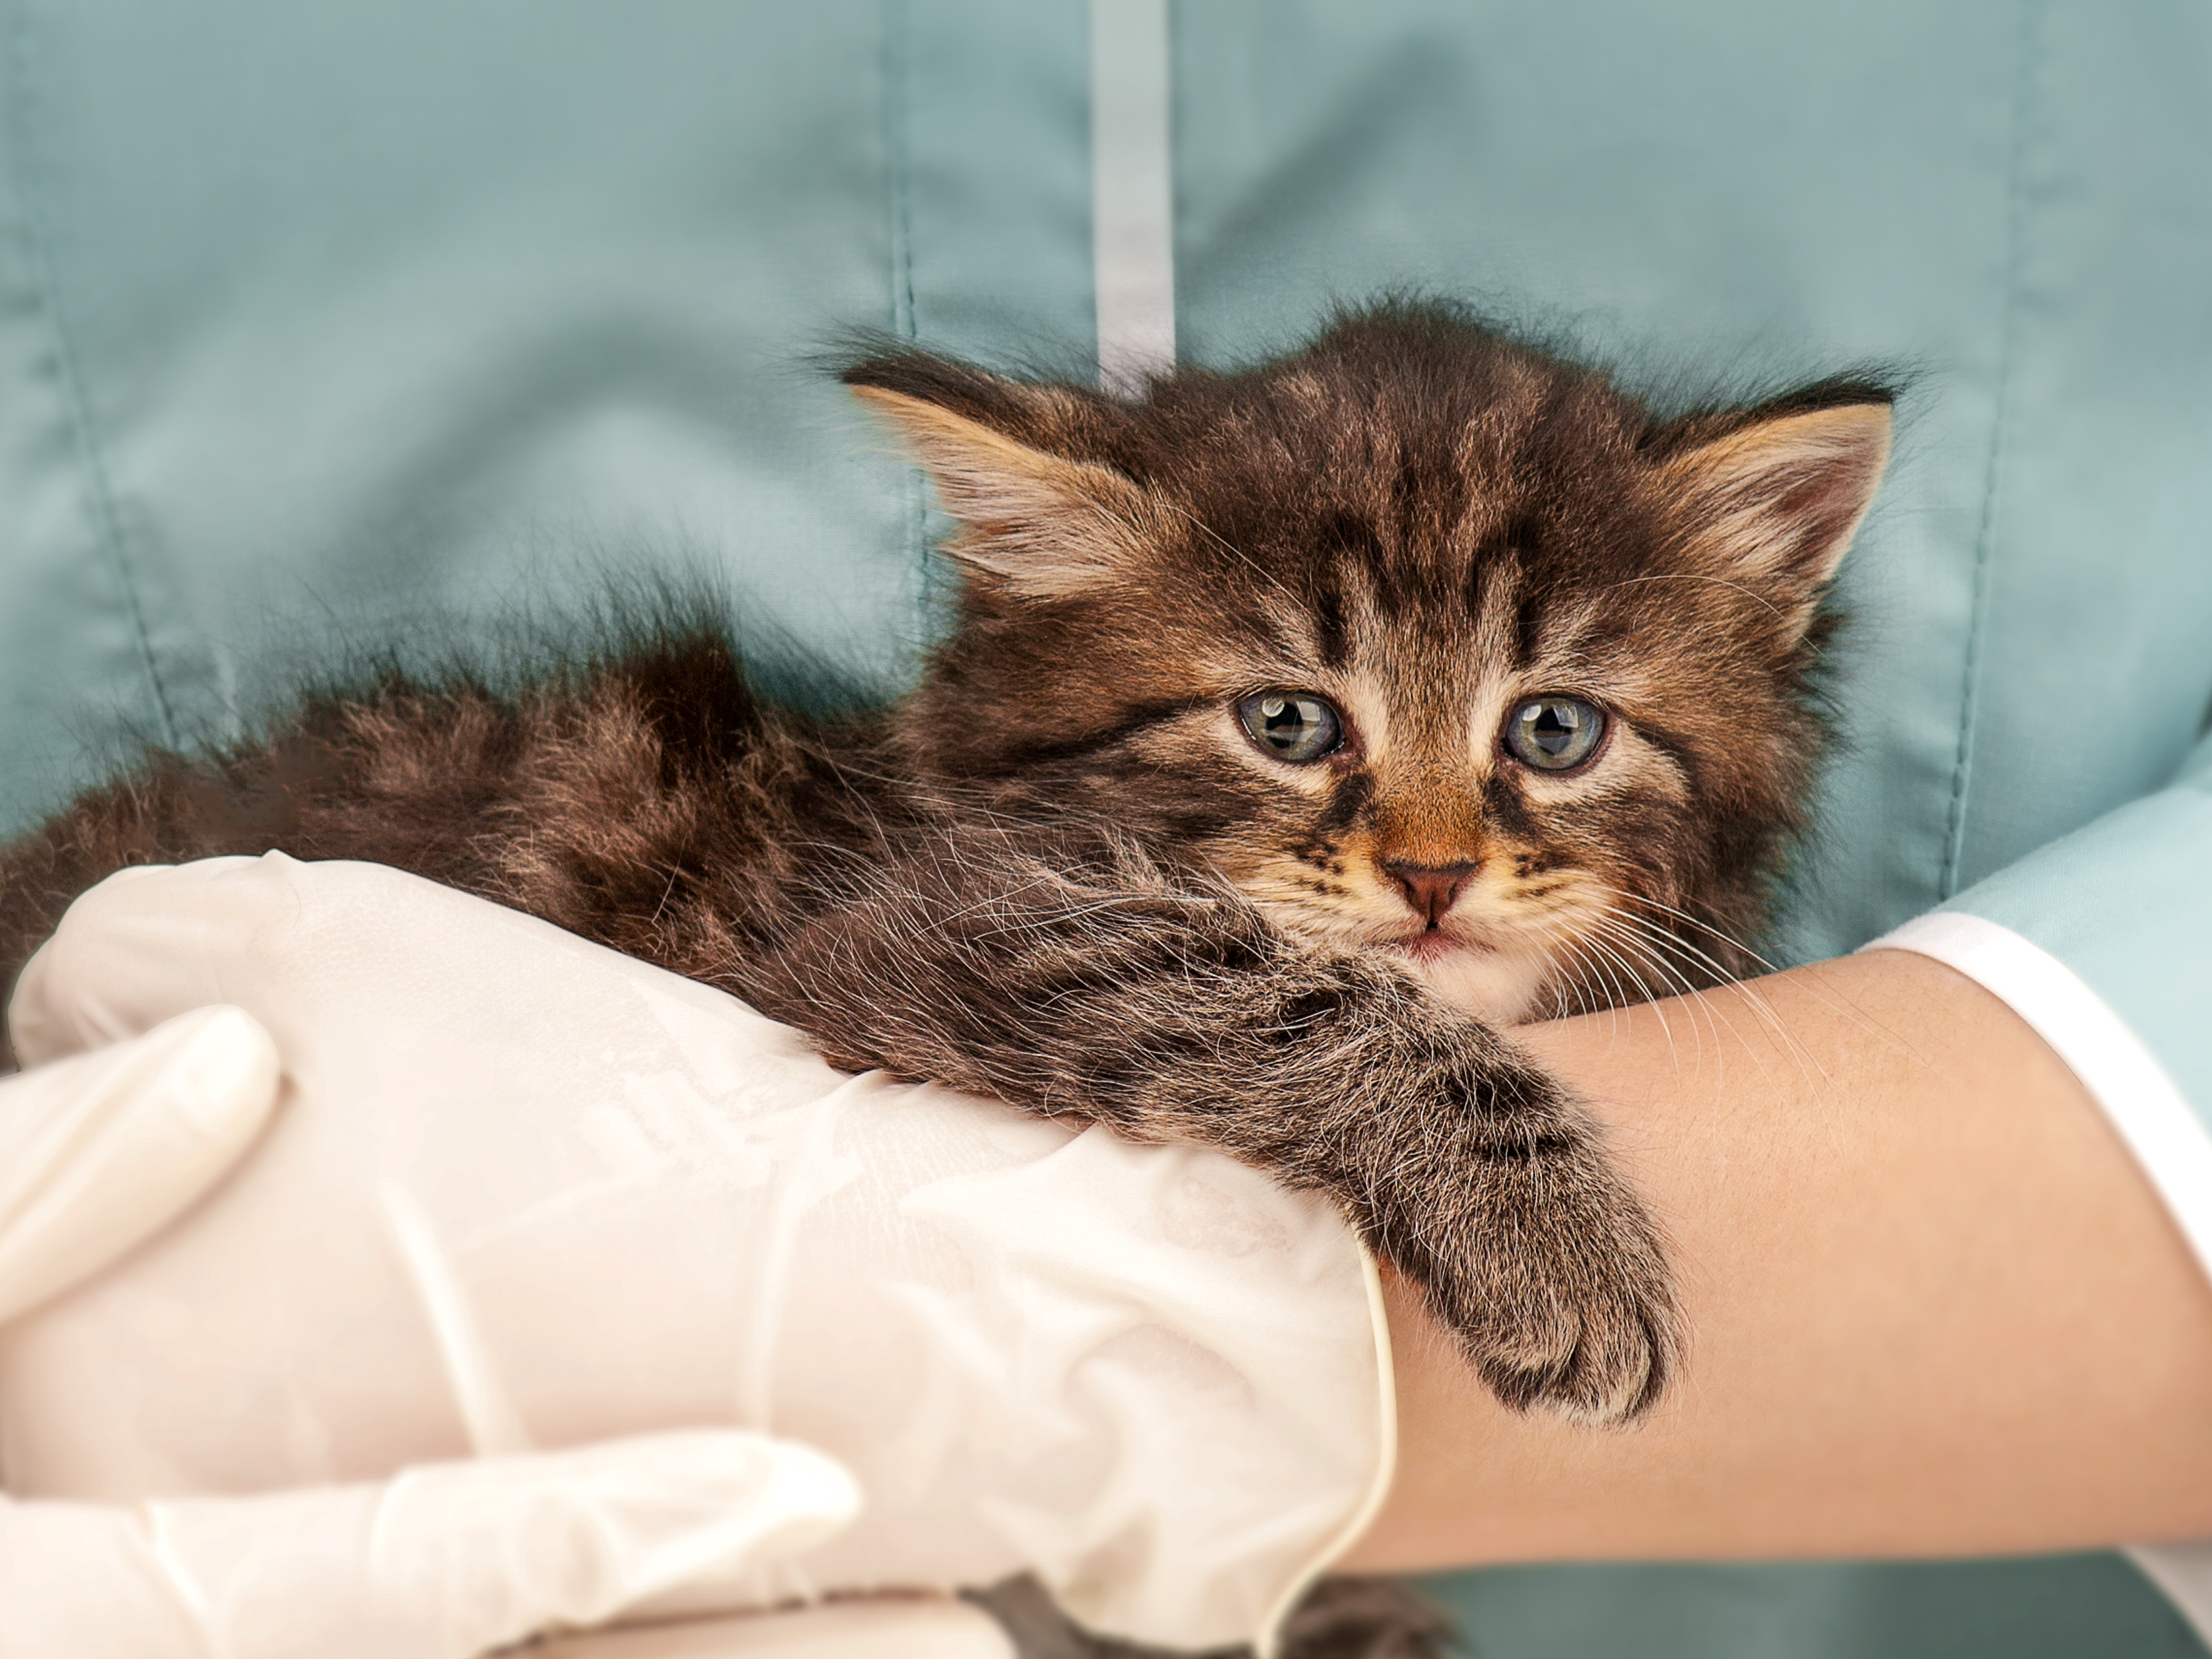 Kitten being held by a vet